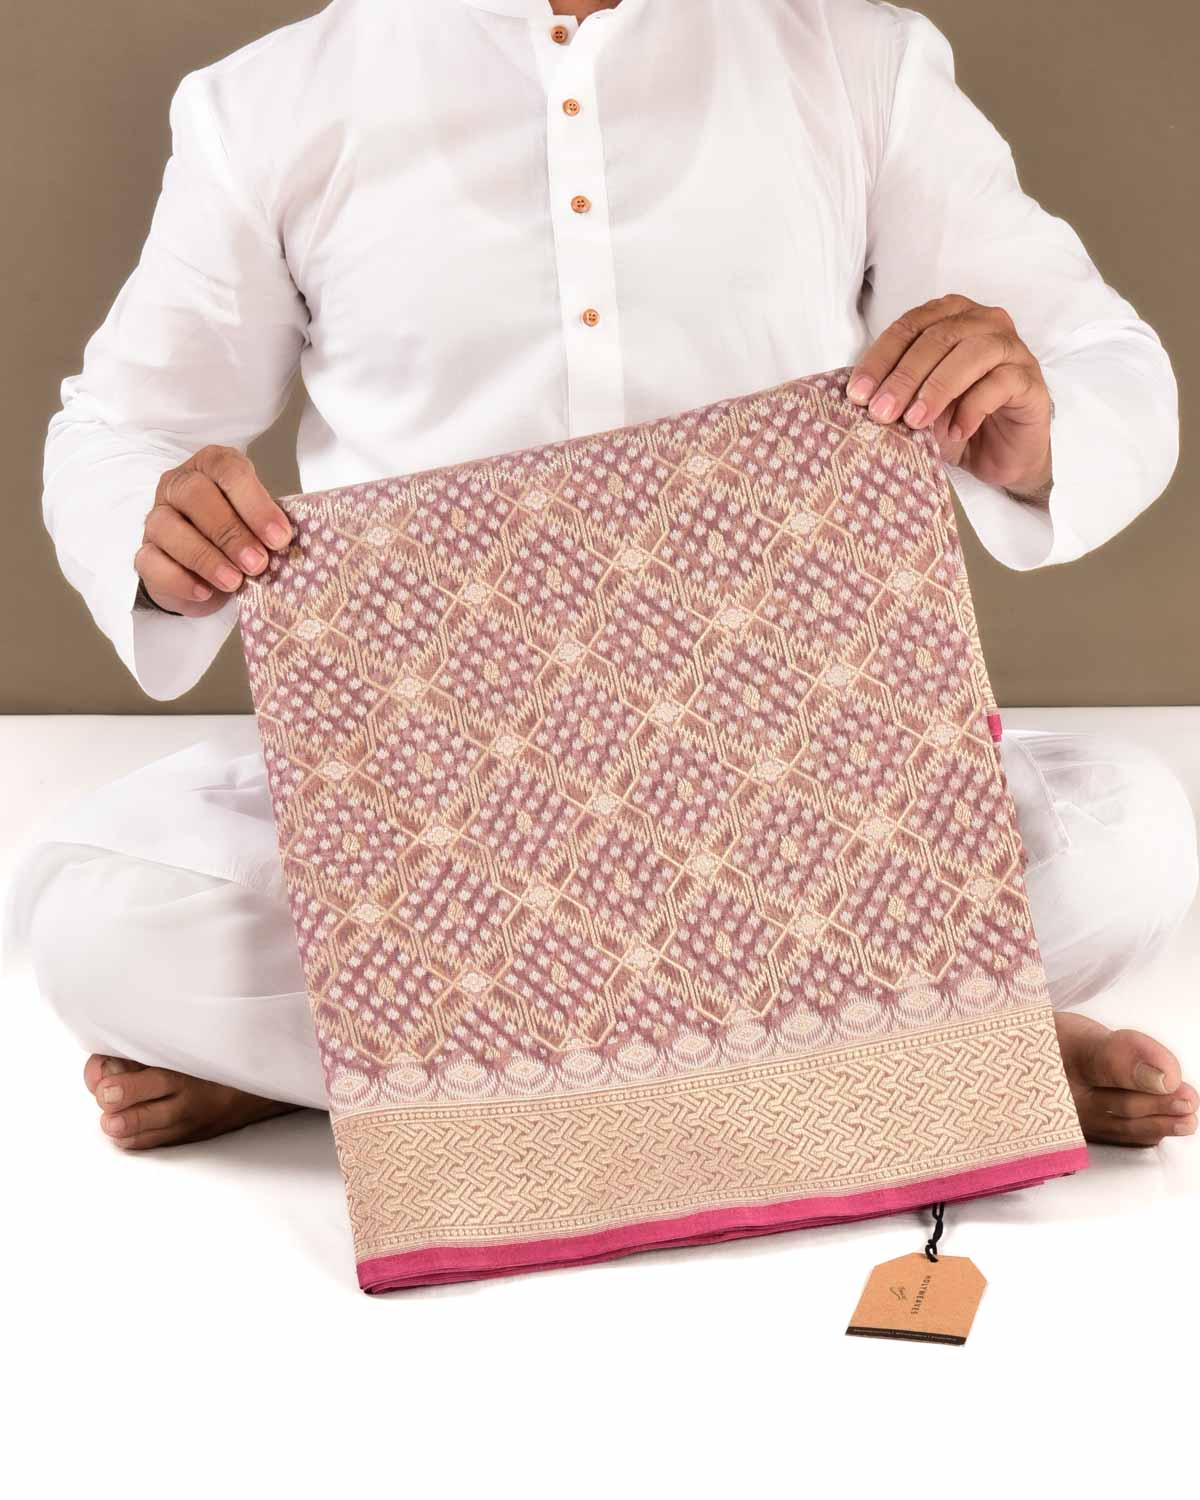 Mauve Banarasi Resham & Gold Zari Grids Cutwork Brocade Handwoven Cotton Silk Saree - By HolyWeaves, Benares